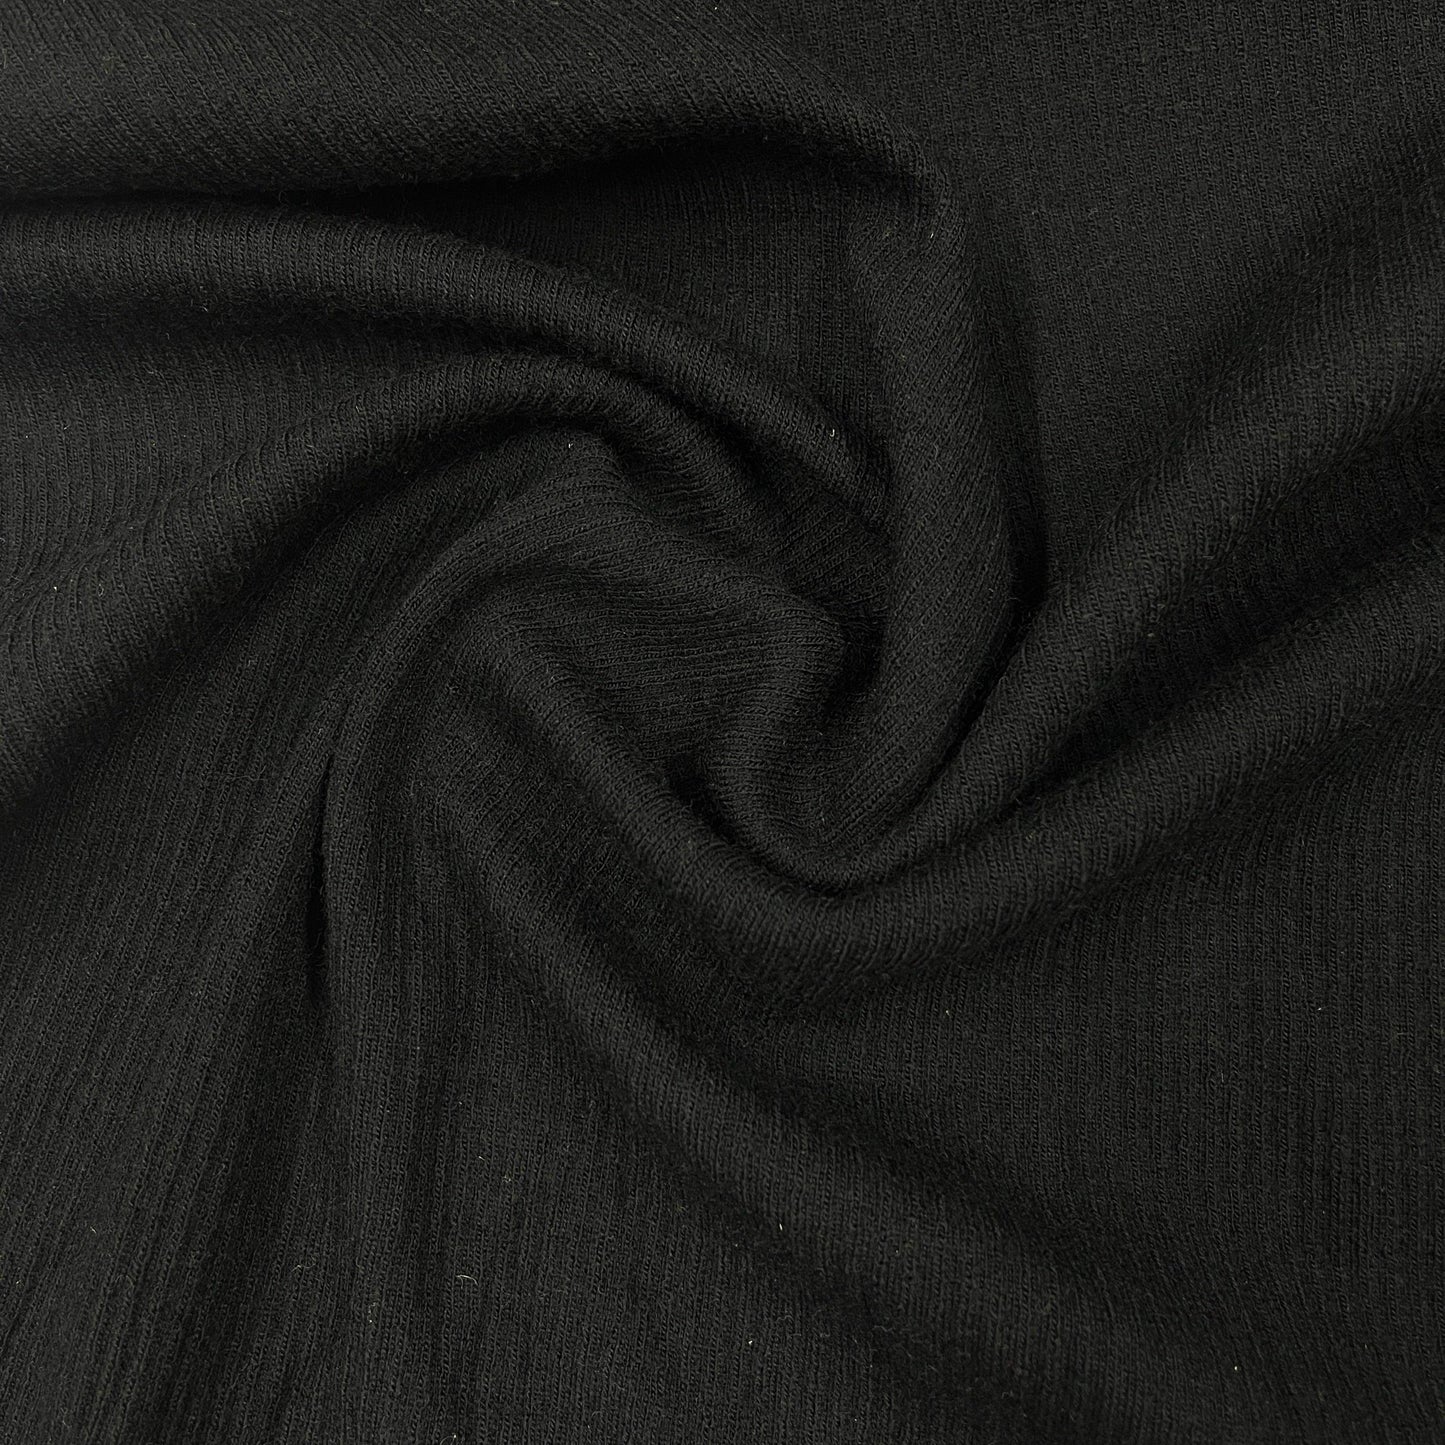 Black Merino Wool Rib Knit Fabric - 1x1 - Nature's Fabrics